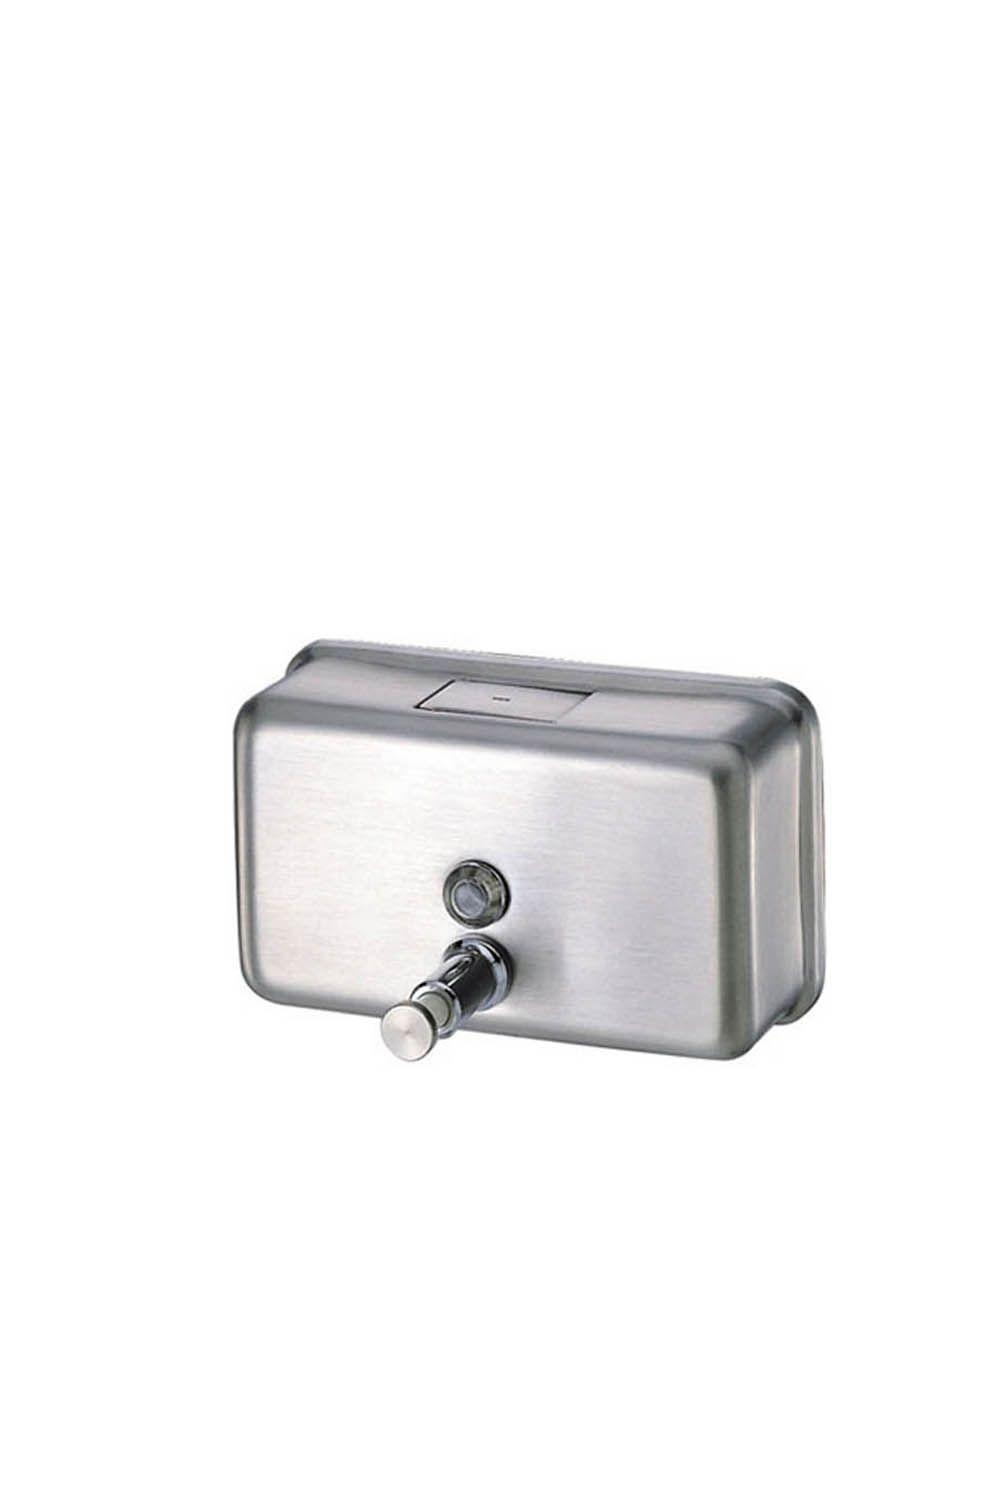 Stainless Steel Liquid Soap Dispenser A-600 (1200ml)